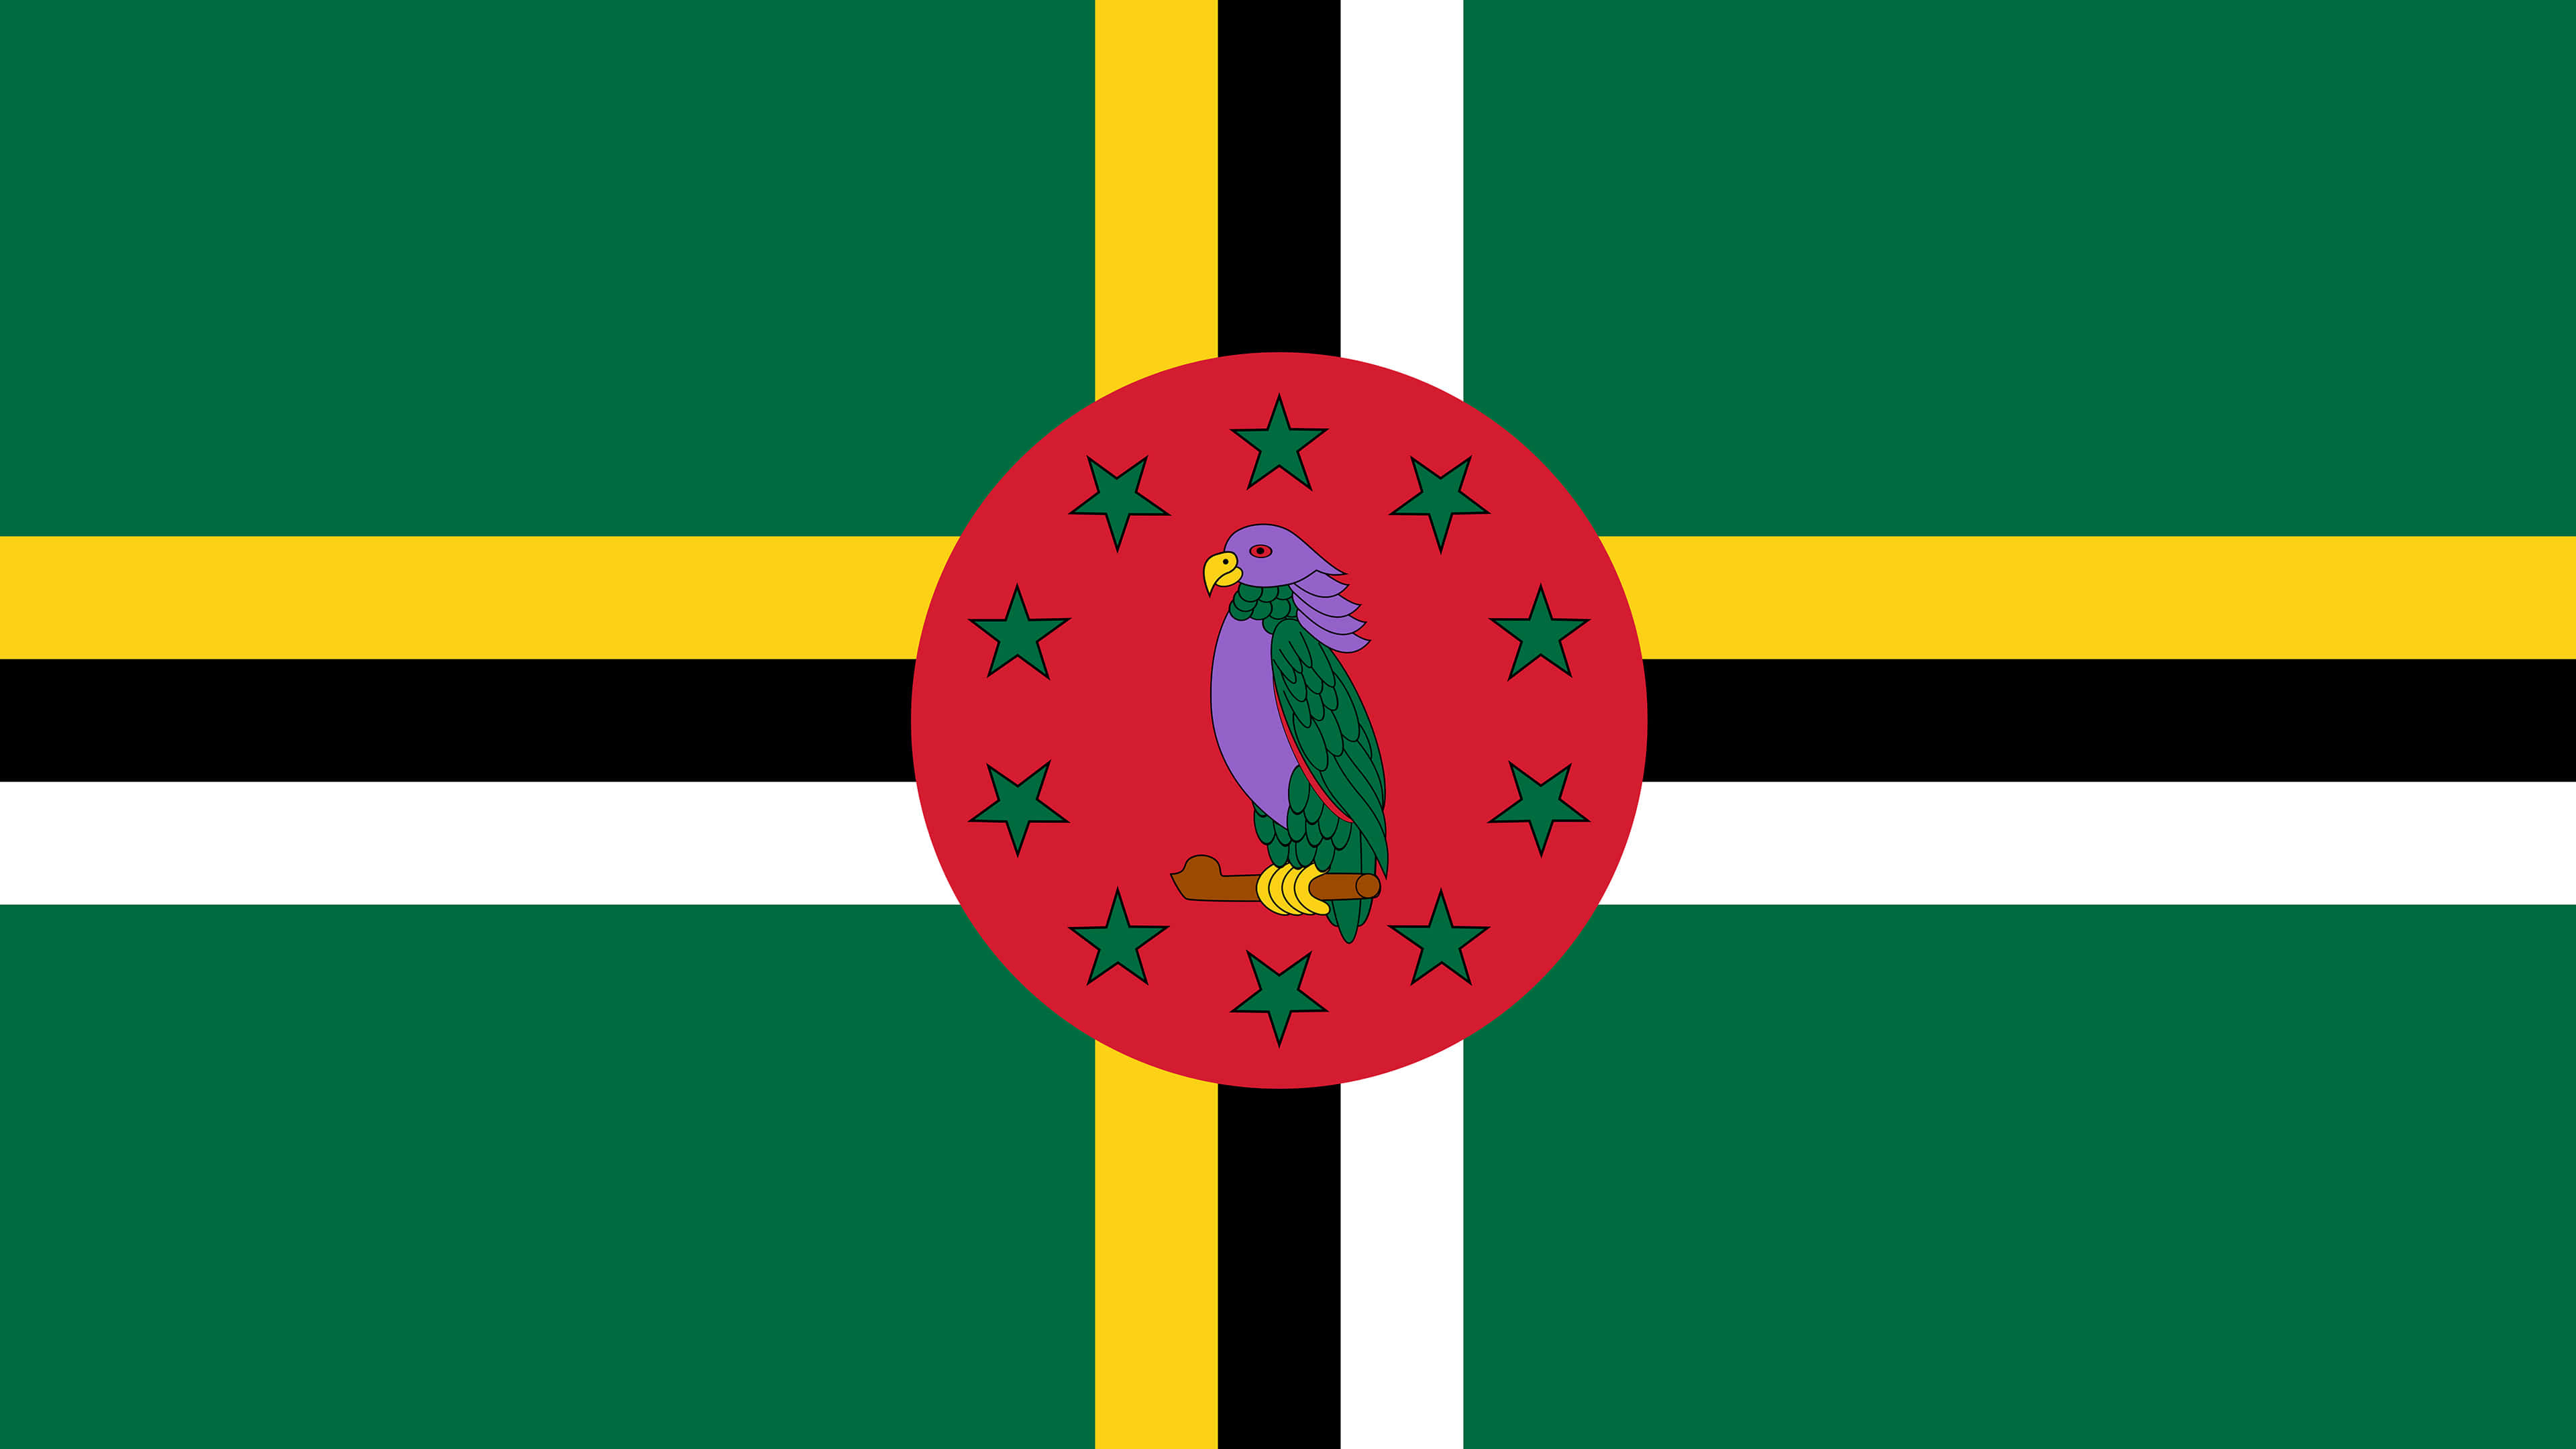 Dominica flag wallpapers, Free download, High resolution, Flag, 3840x2160 4K Desktop